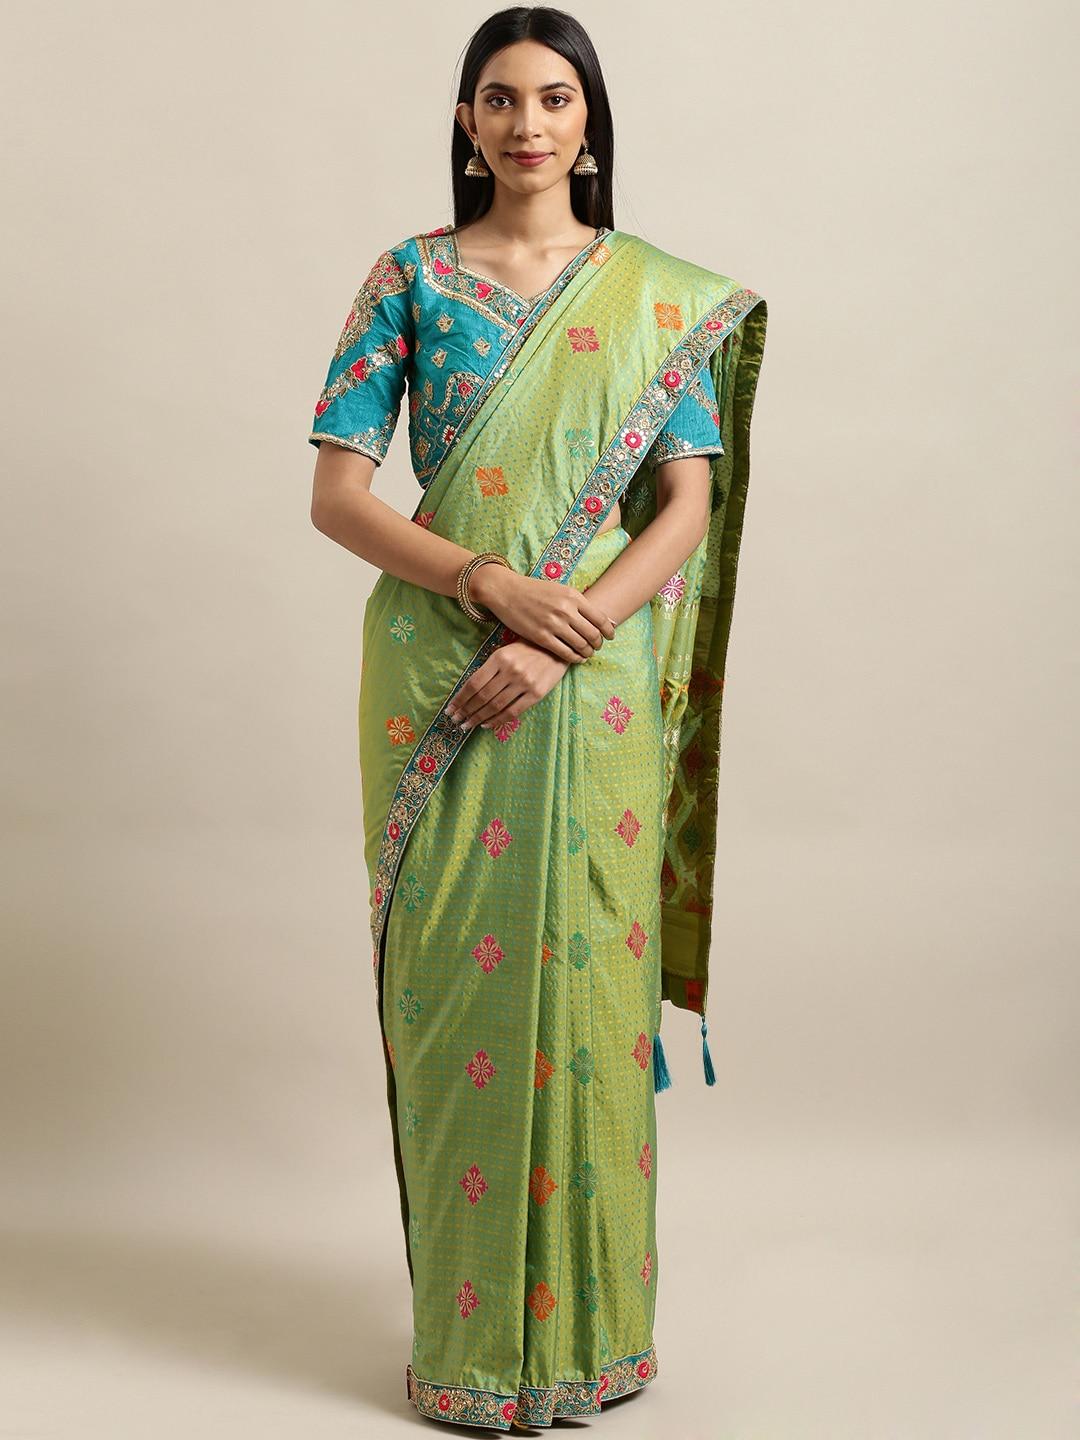 manohari green & maroon embroidered saree